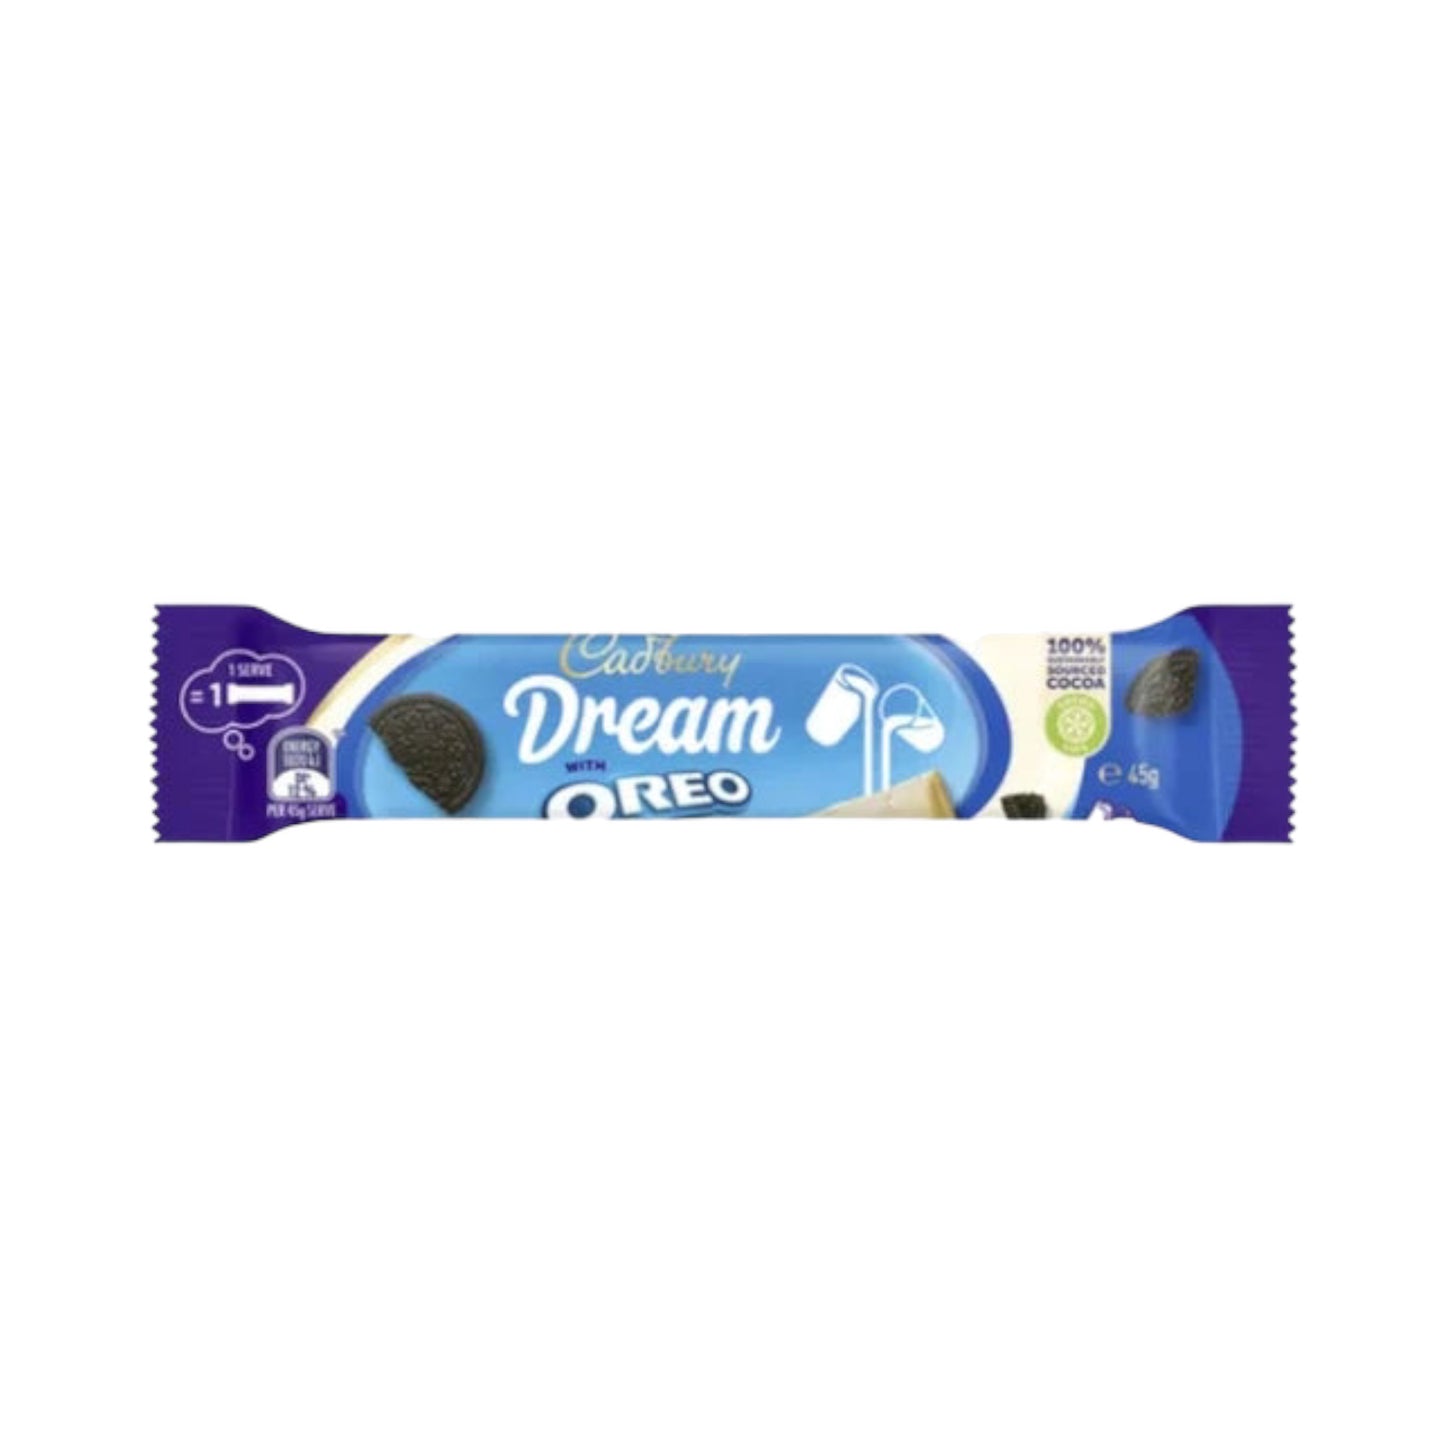 Cadbury Dream - with Oreo (45g)